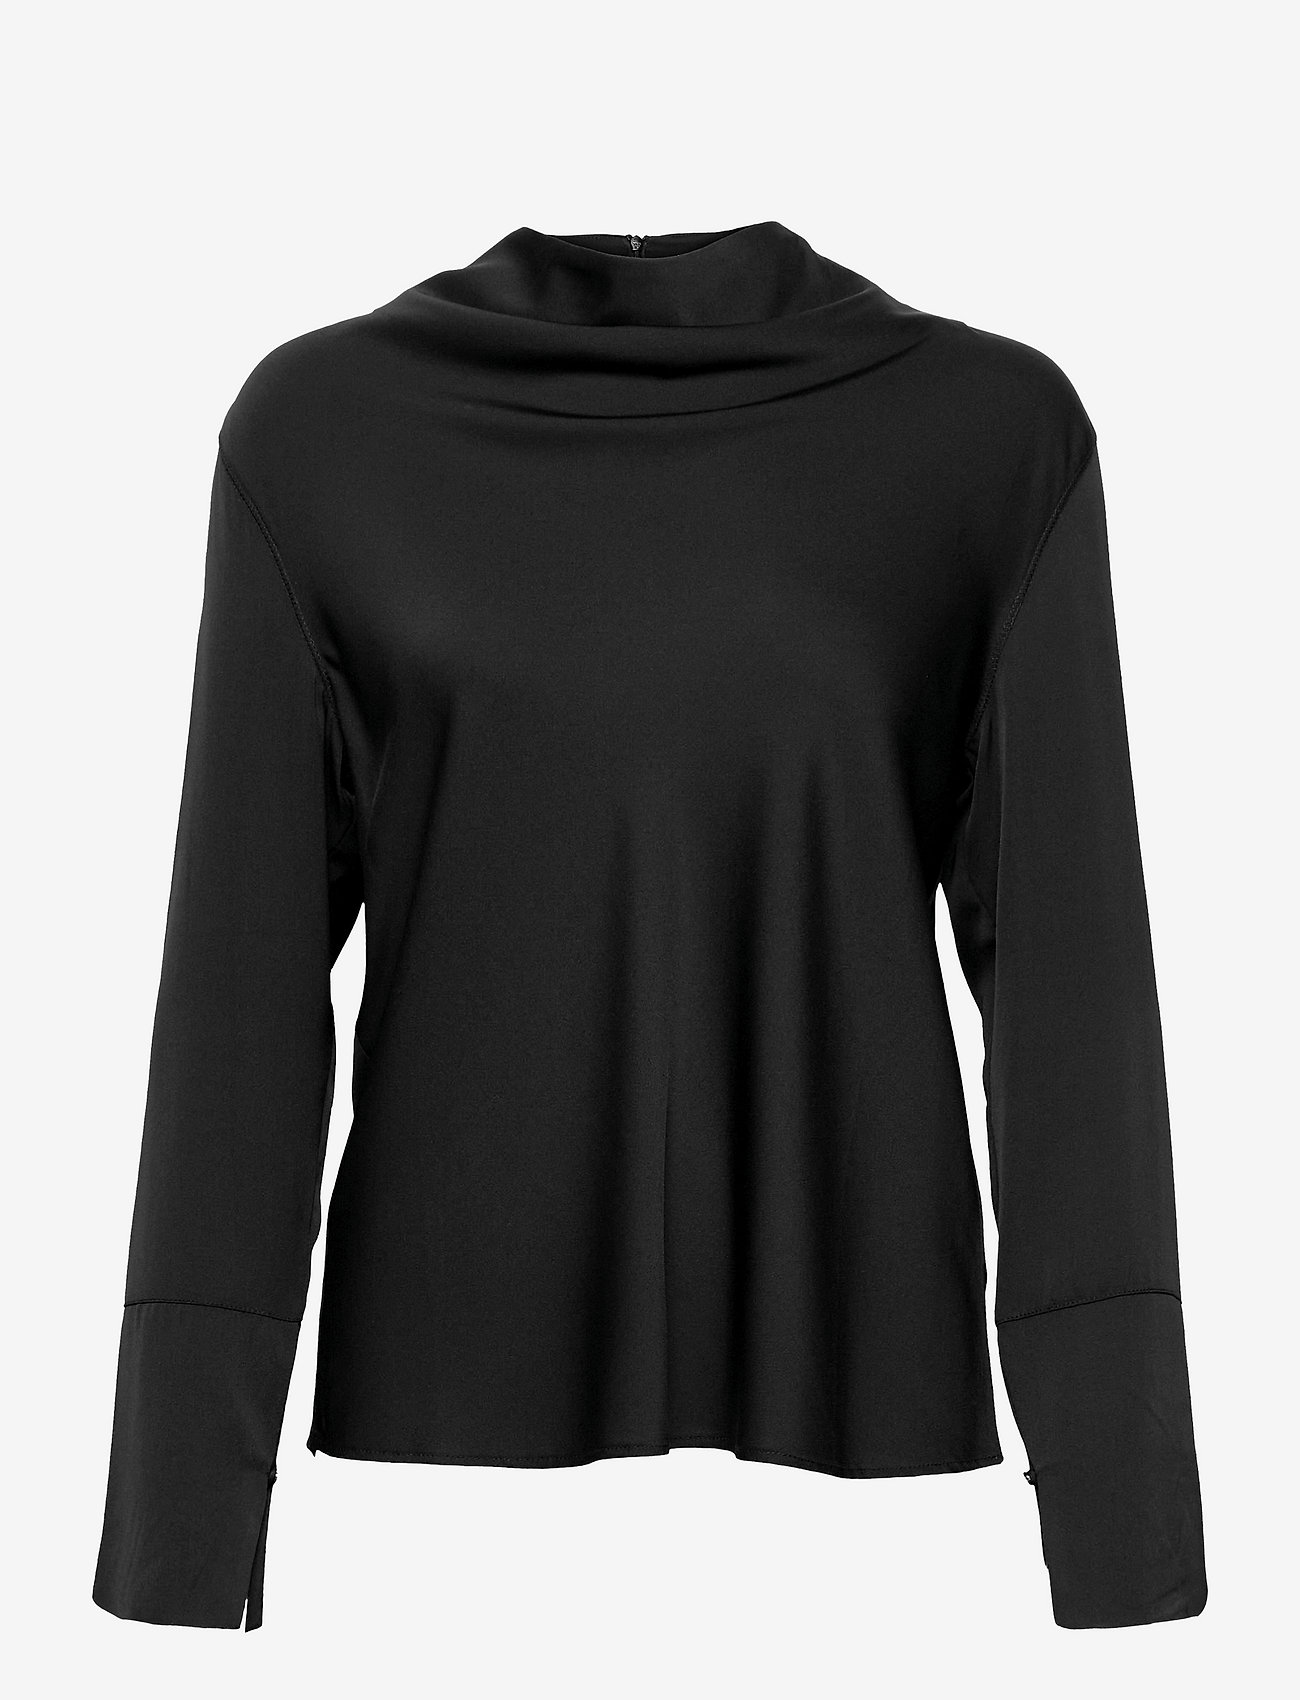 Ahlvar Gallery - Ayumi blouse - blouses à manches longues - black - 1